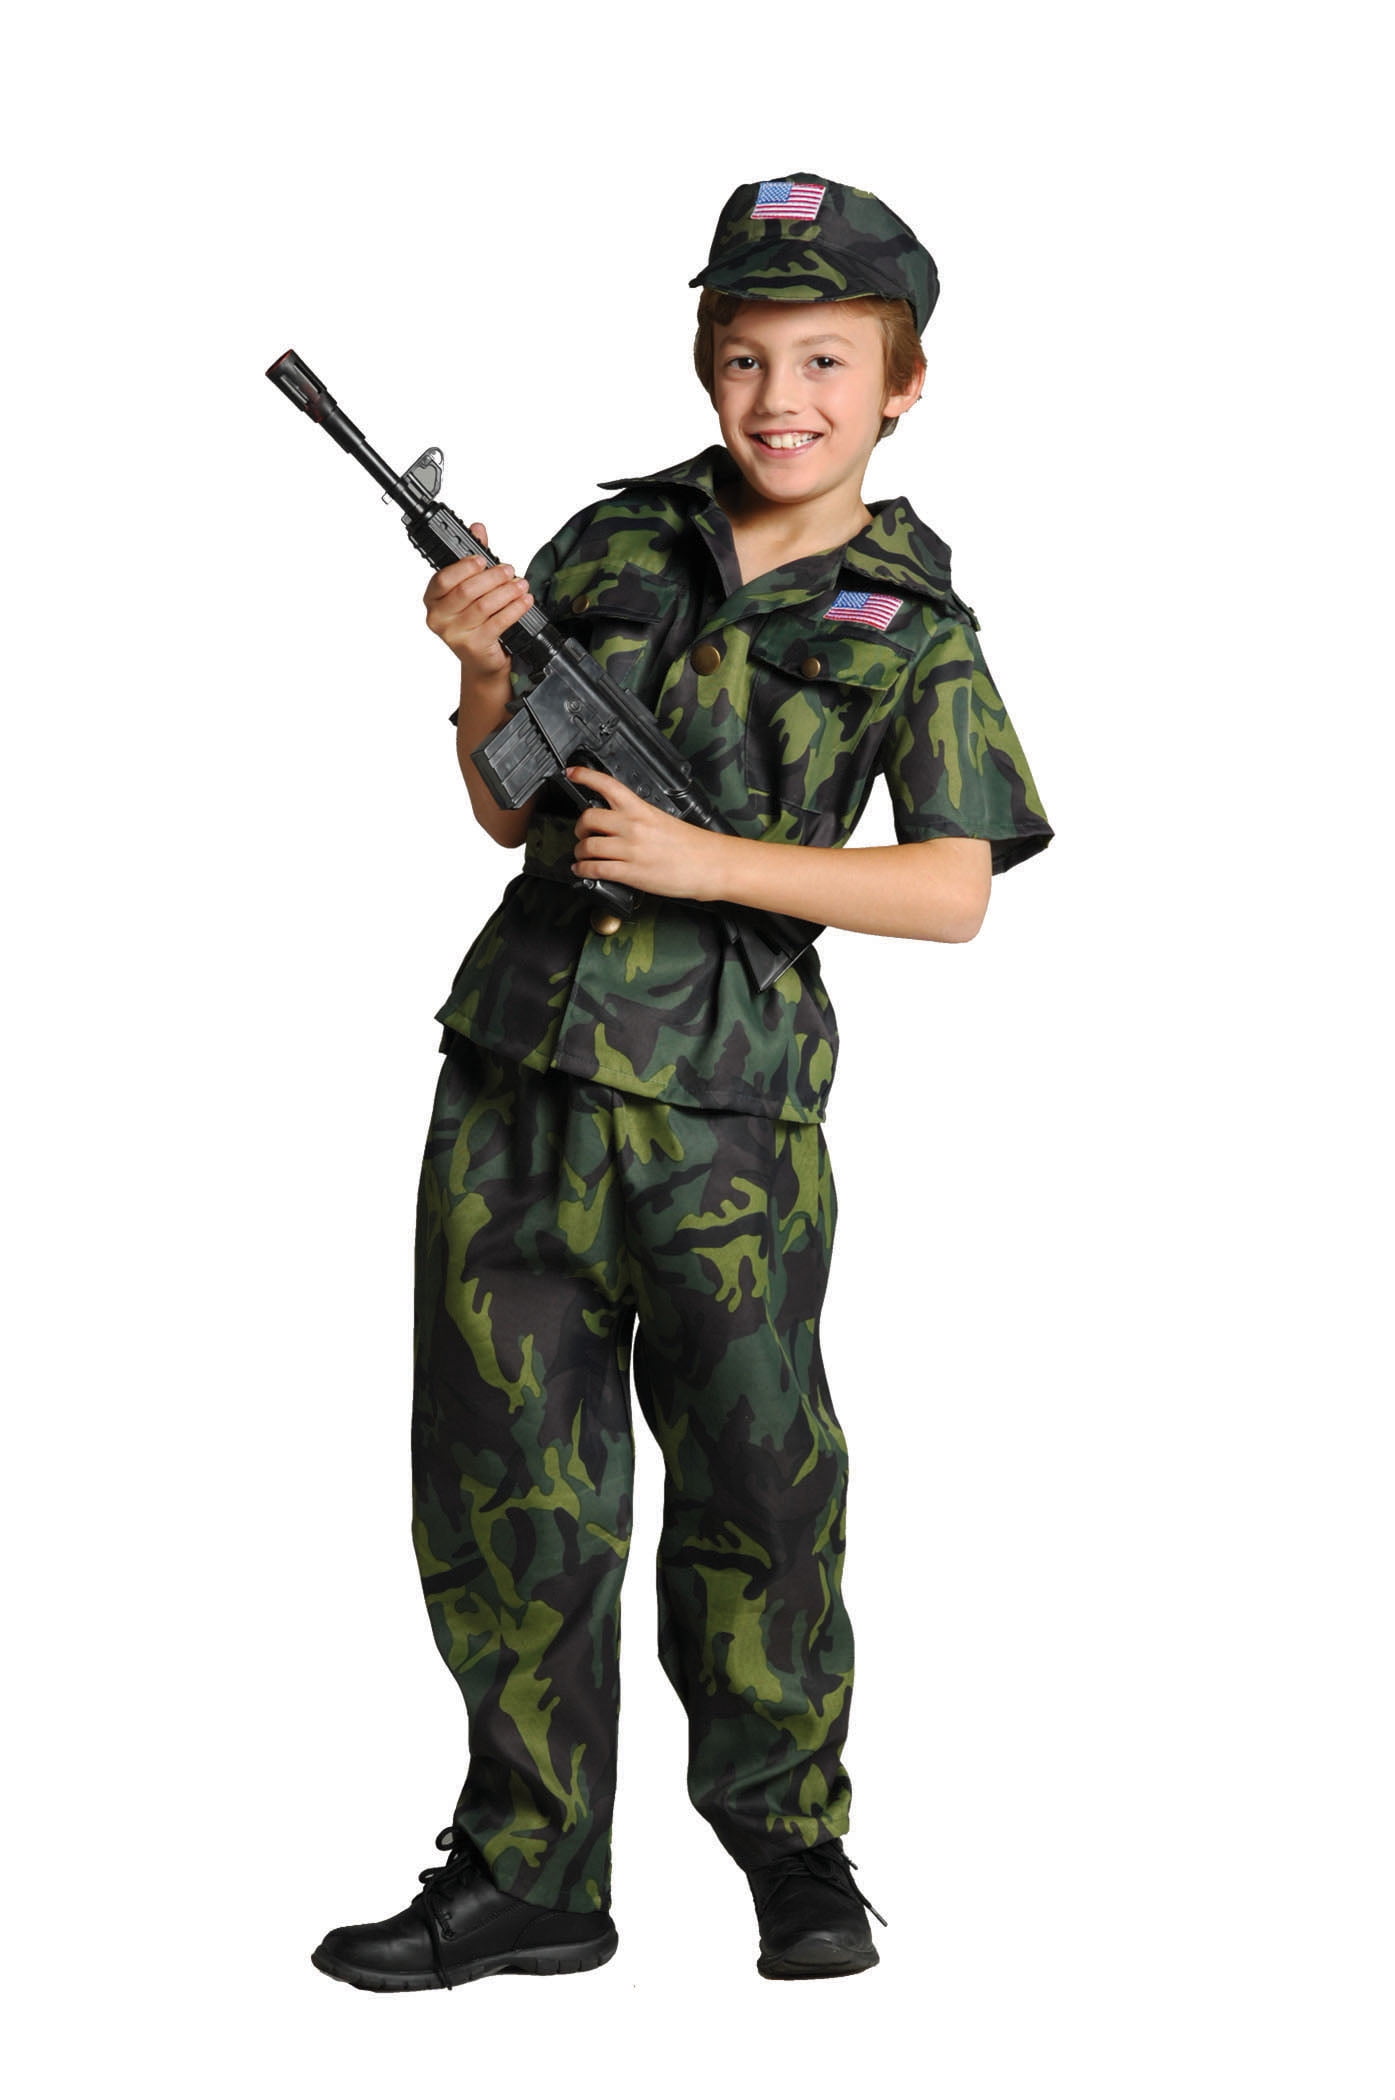 Guns 11 Pcs Kids Army Soldier Military Combat Marines Halloween Costume Del...